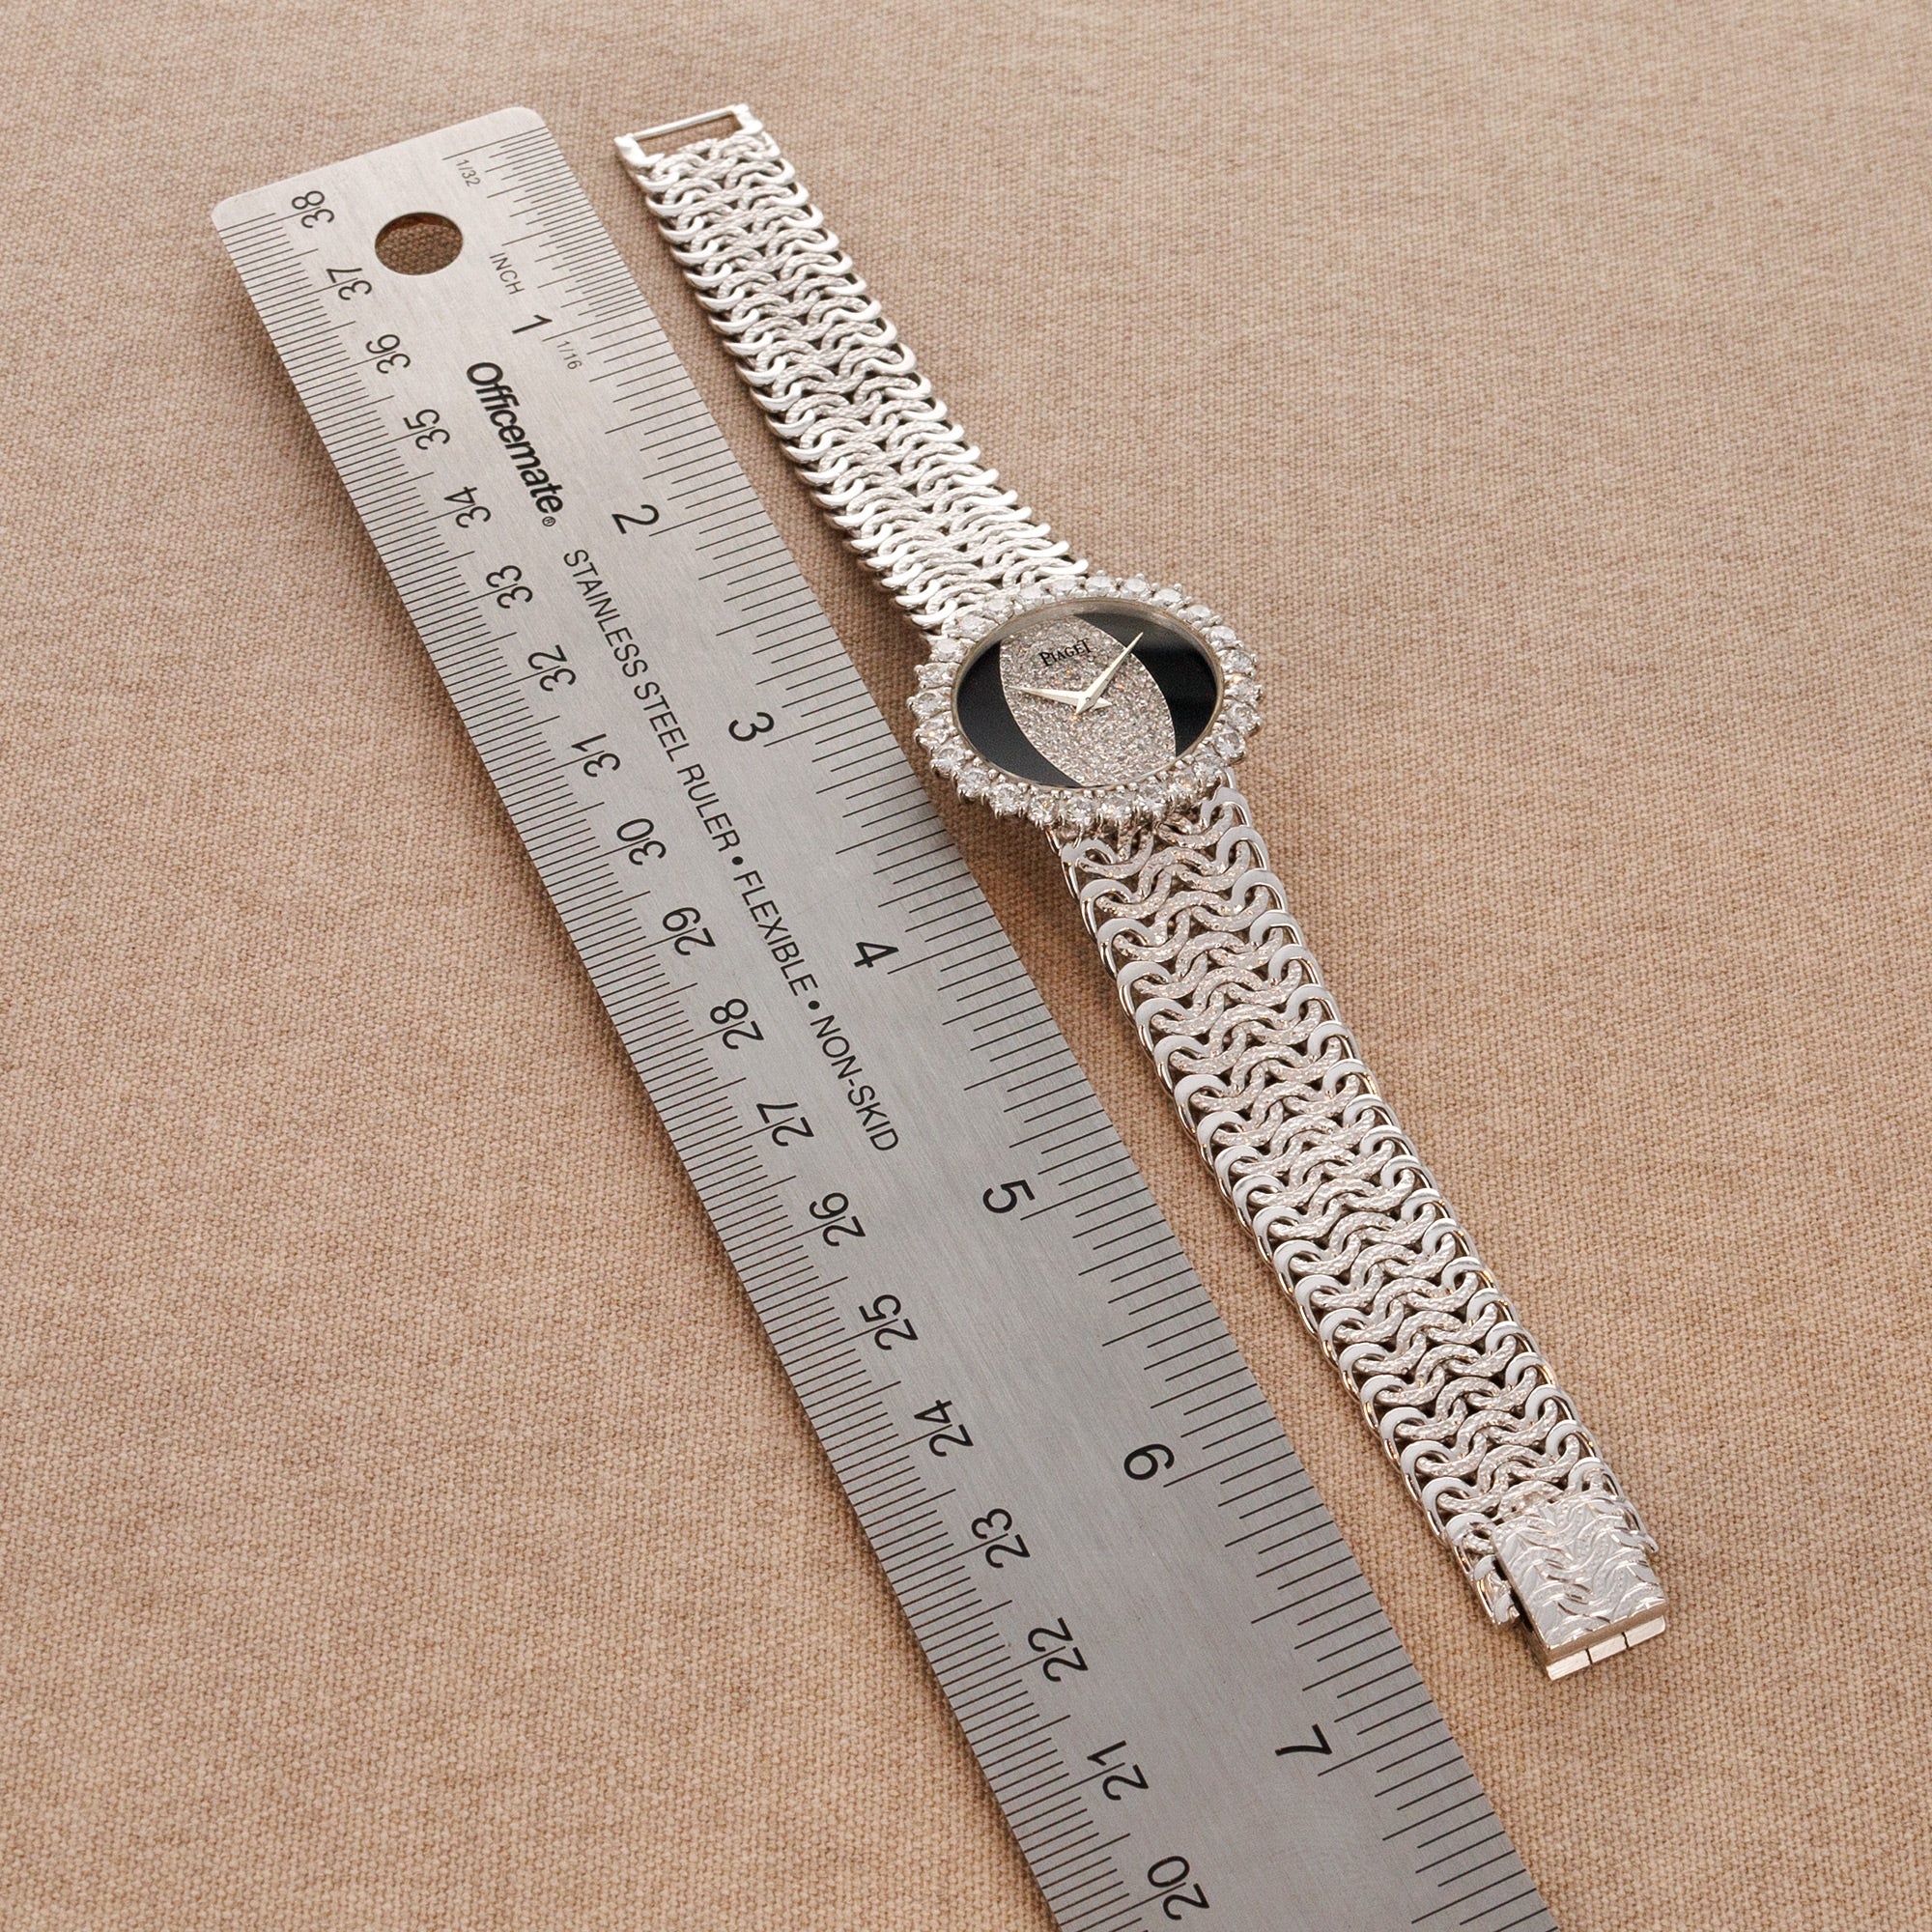 Piaget - Piaget White Gold Diamond Onyx Ref. 9802N93 - The Keystone Watches